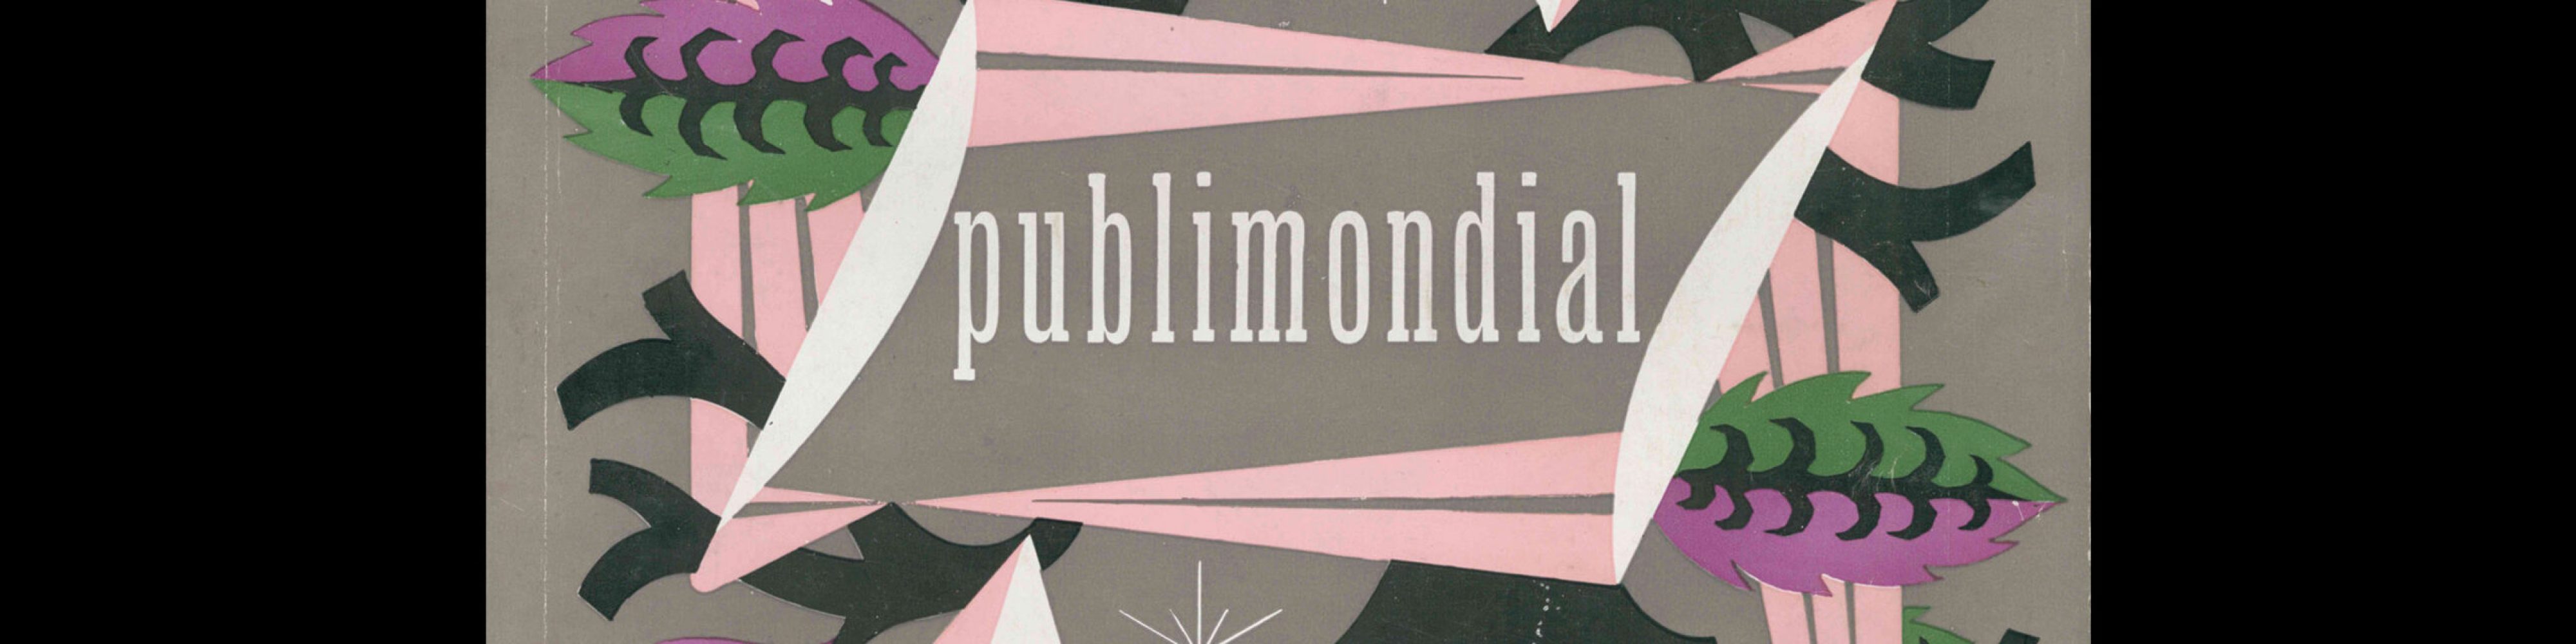 Publimondial 50, 1953. Cover design by Bernard Baudouin